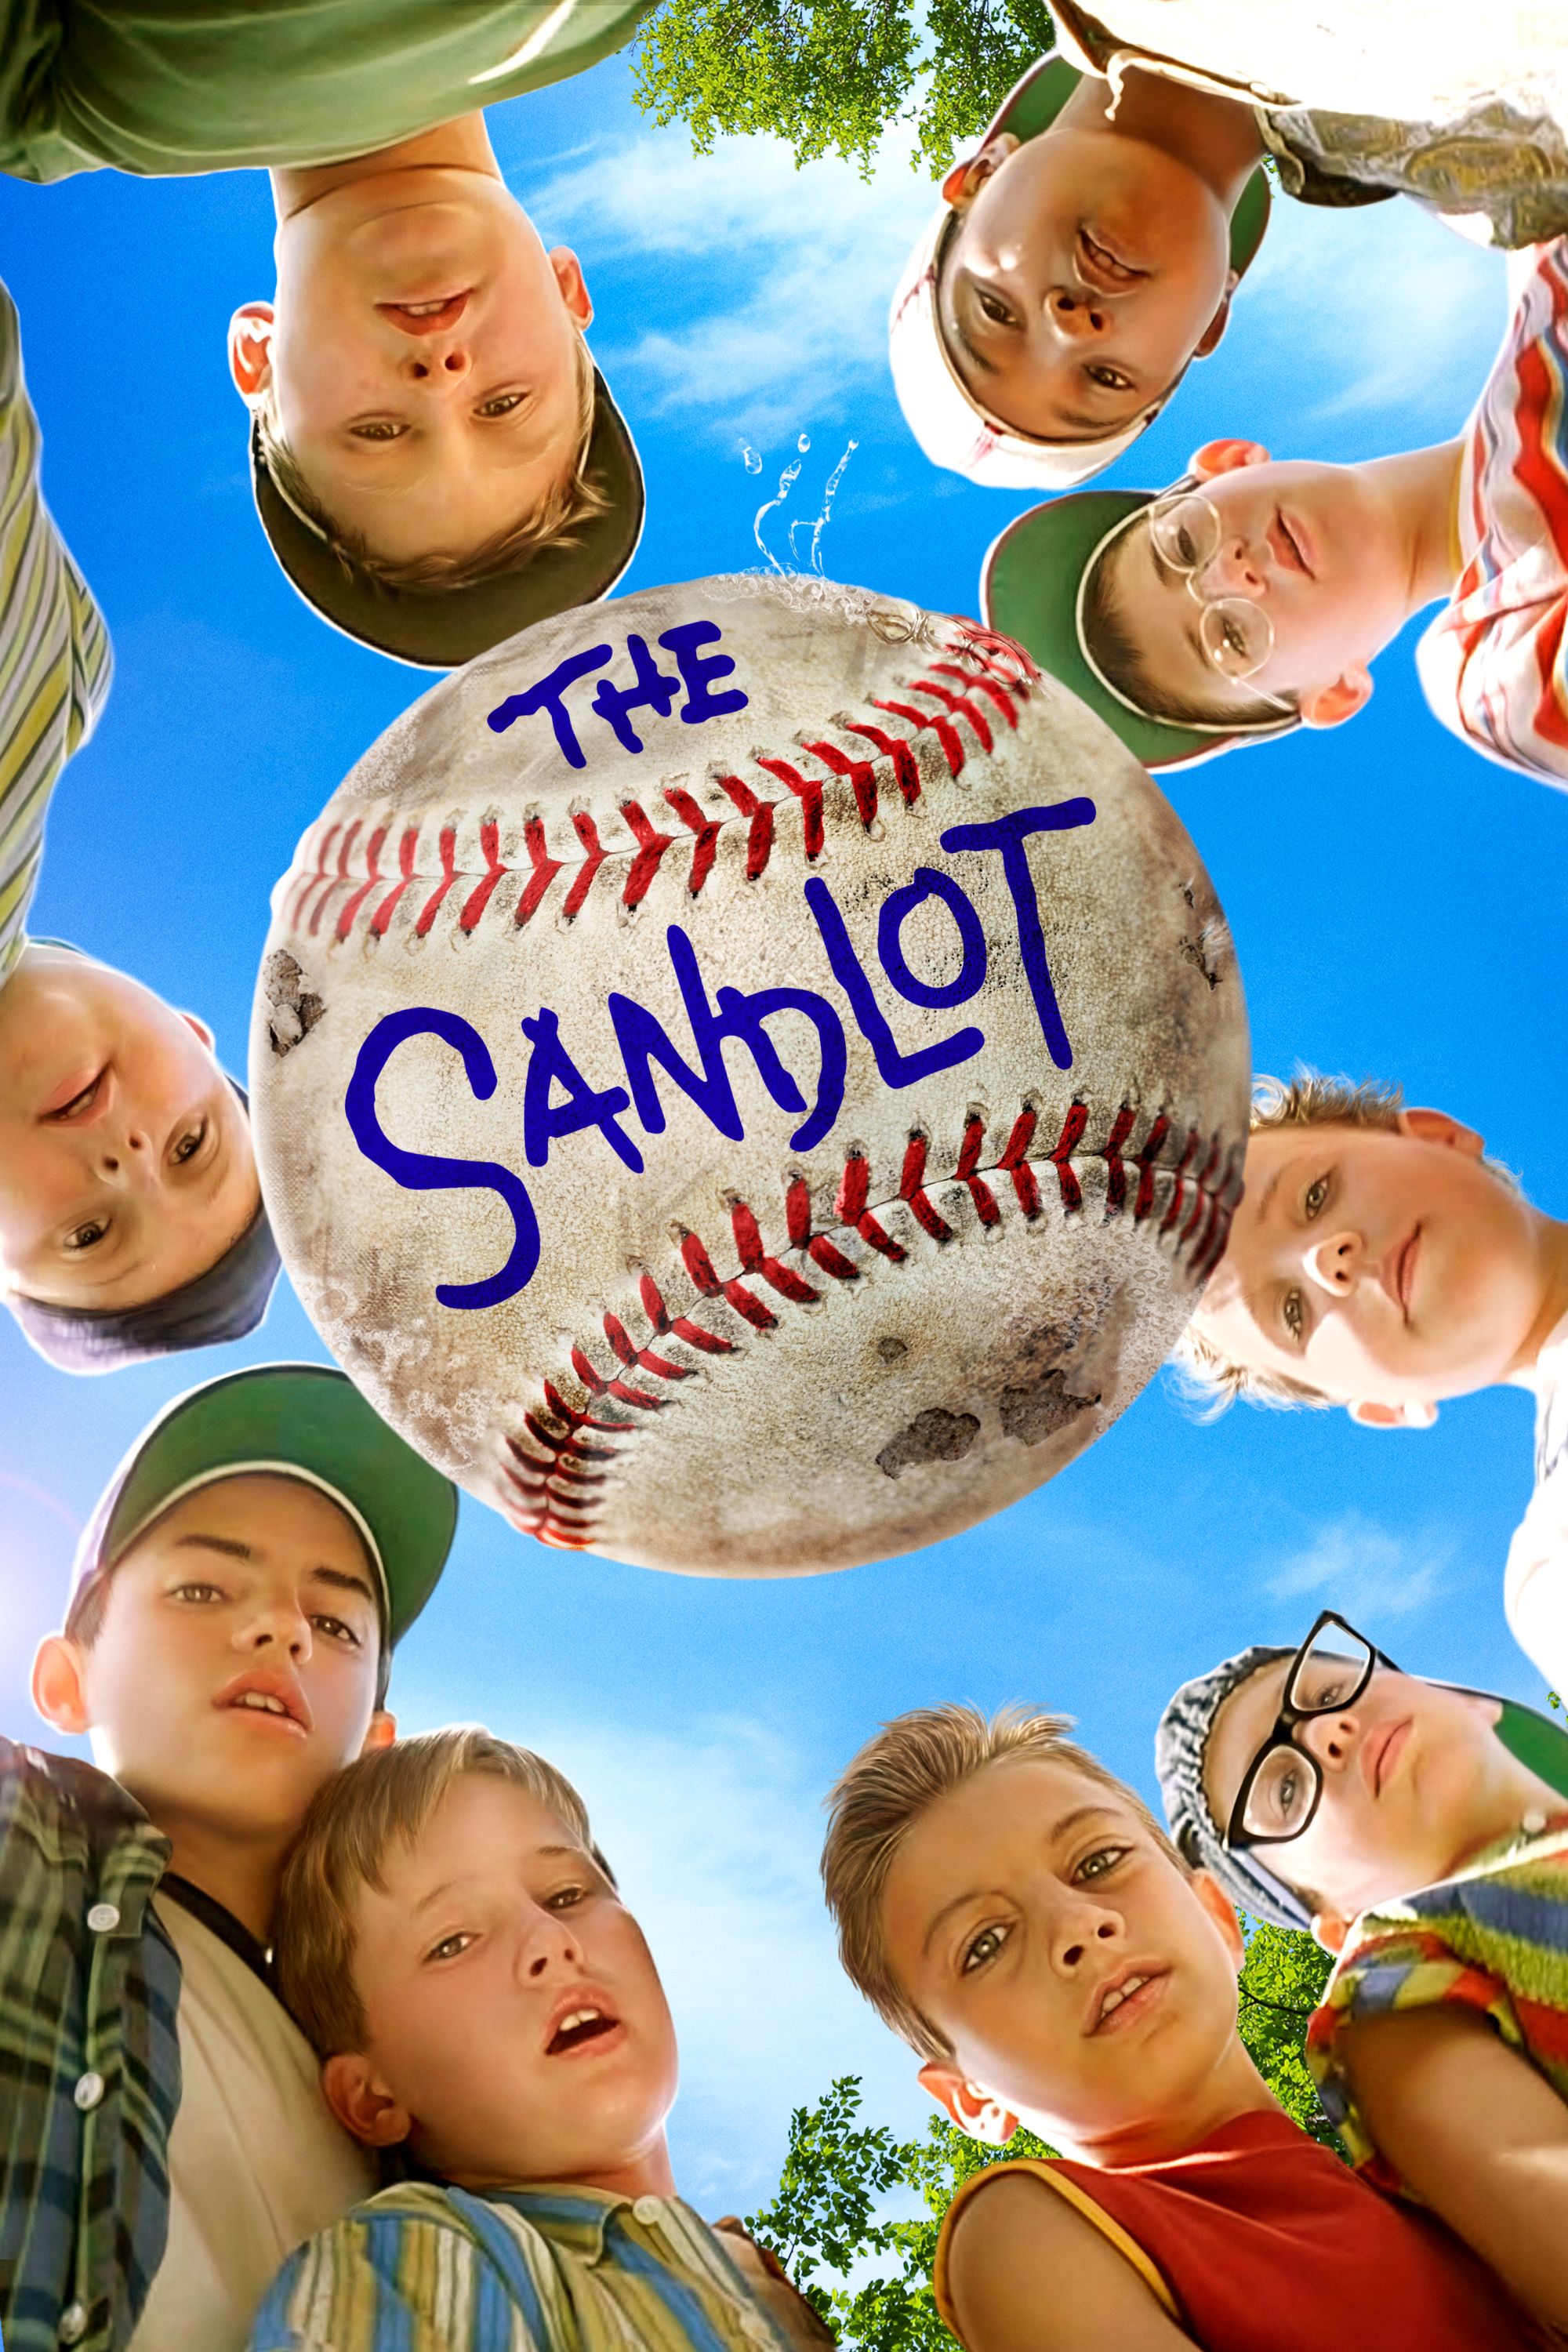 The Sandlot cast reunites 25 years after summer baseball film